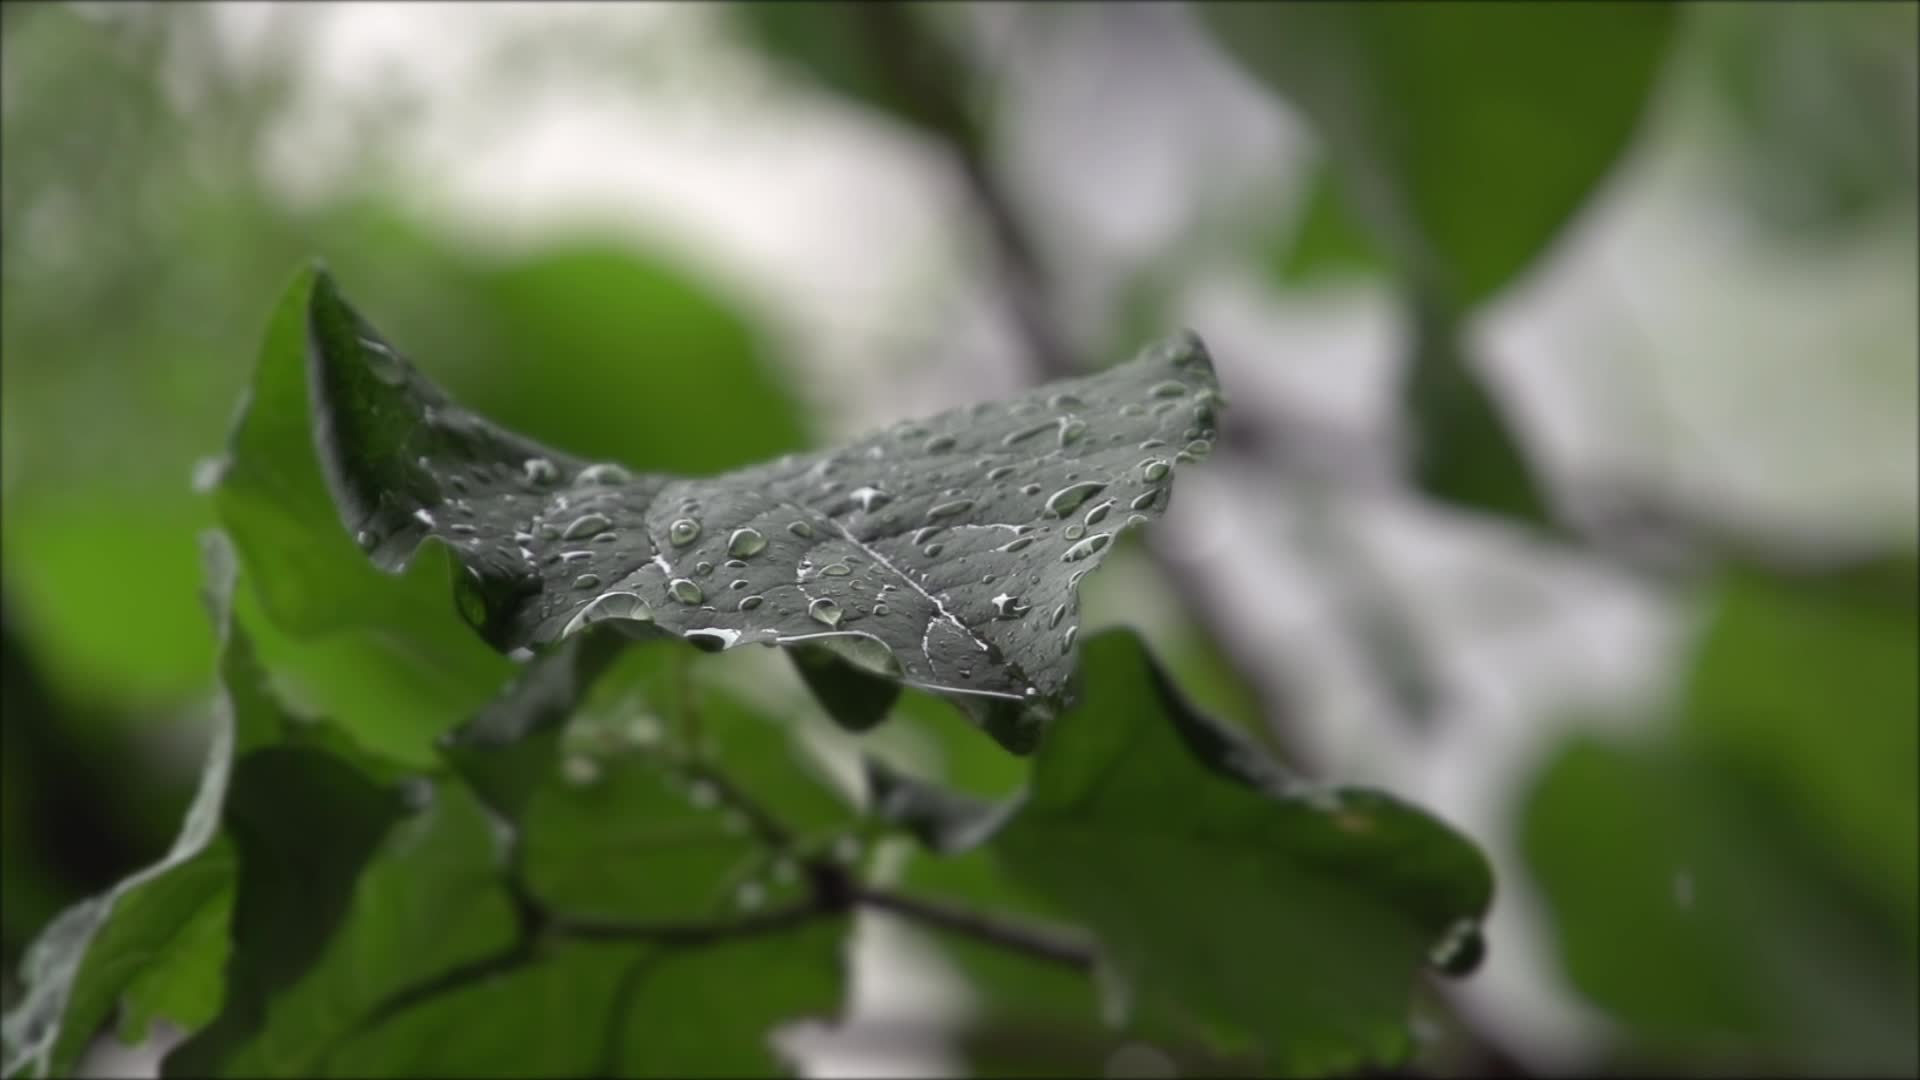 Rain on a Leaf in Slow Motion